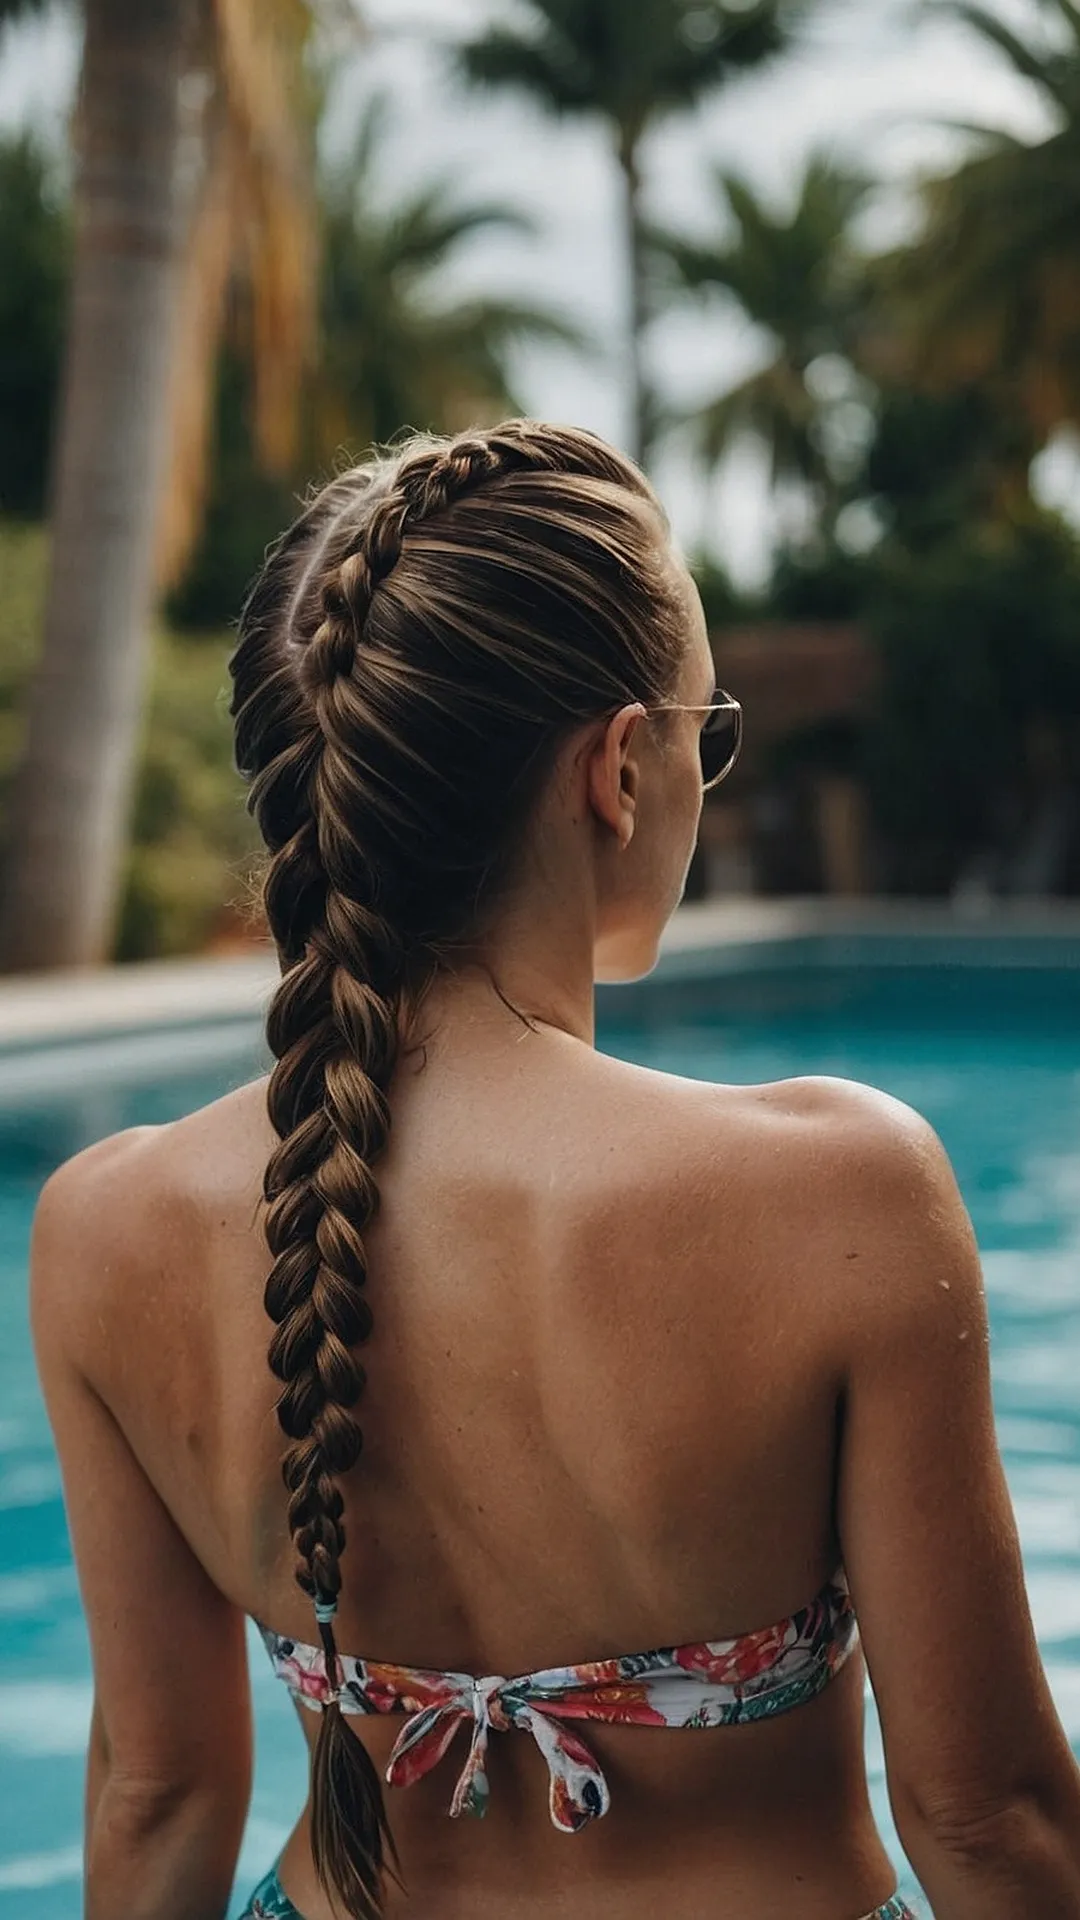 Poolside Glam: Hair Ideas for a Swim